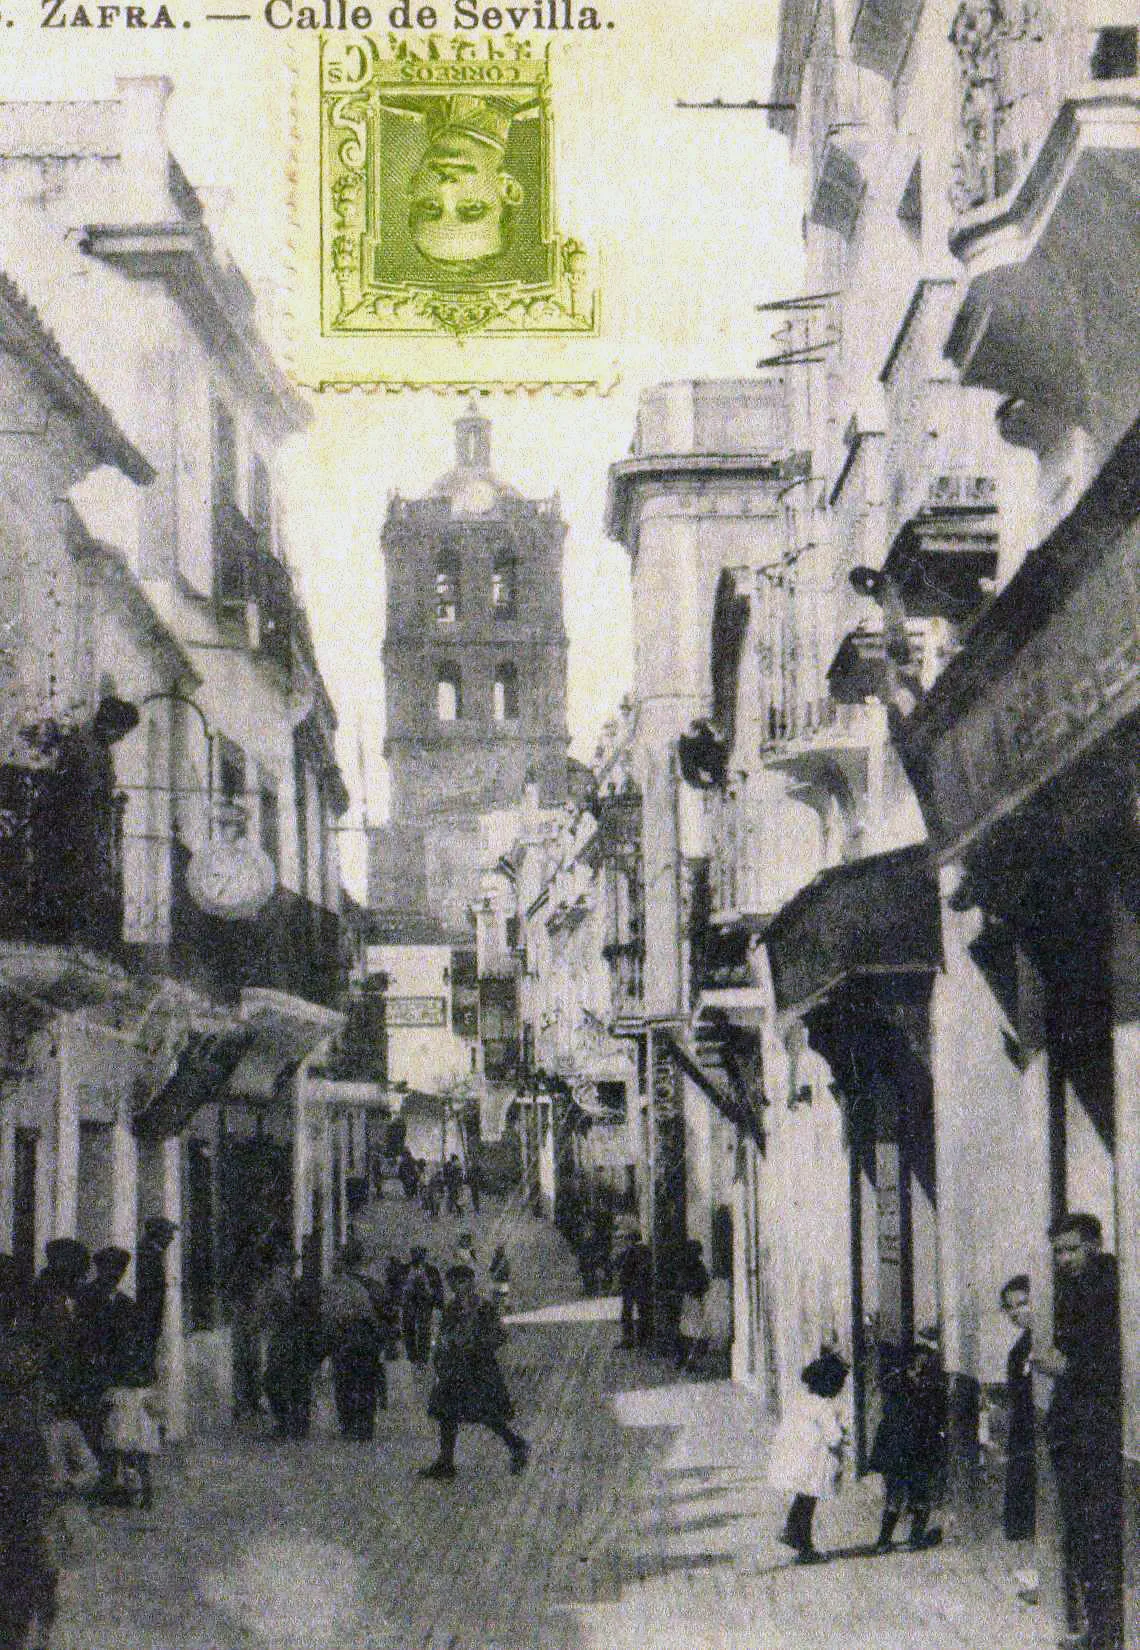 Photo showing: Calle Sevilla de Zafra a comienzos del siglo XX